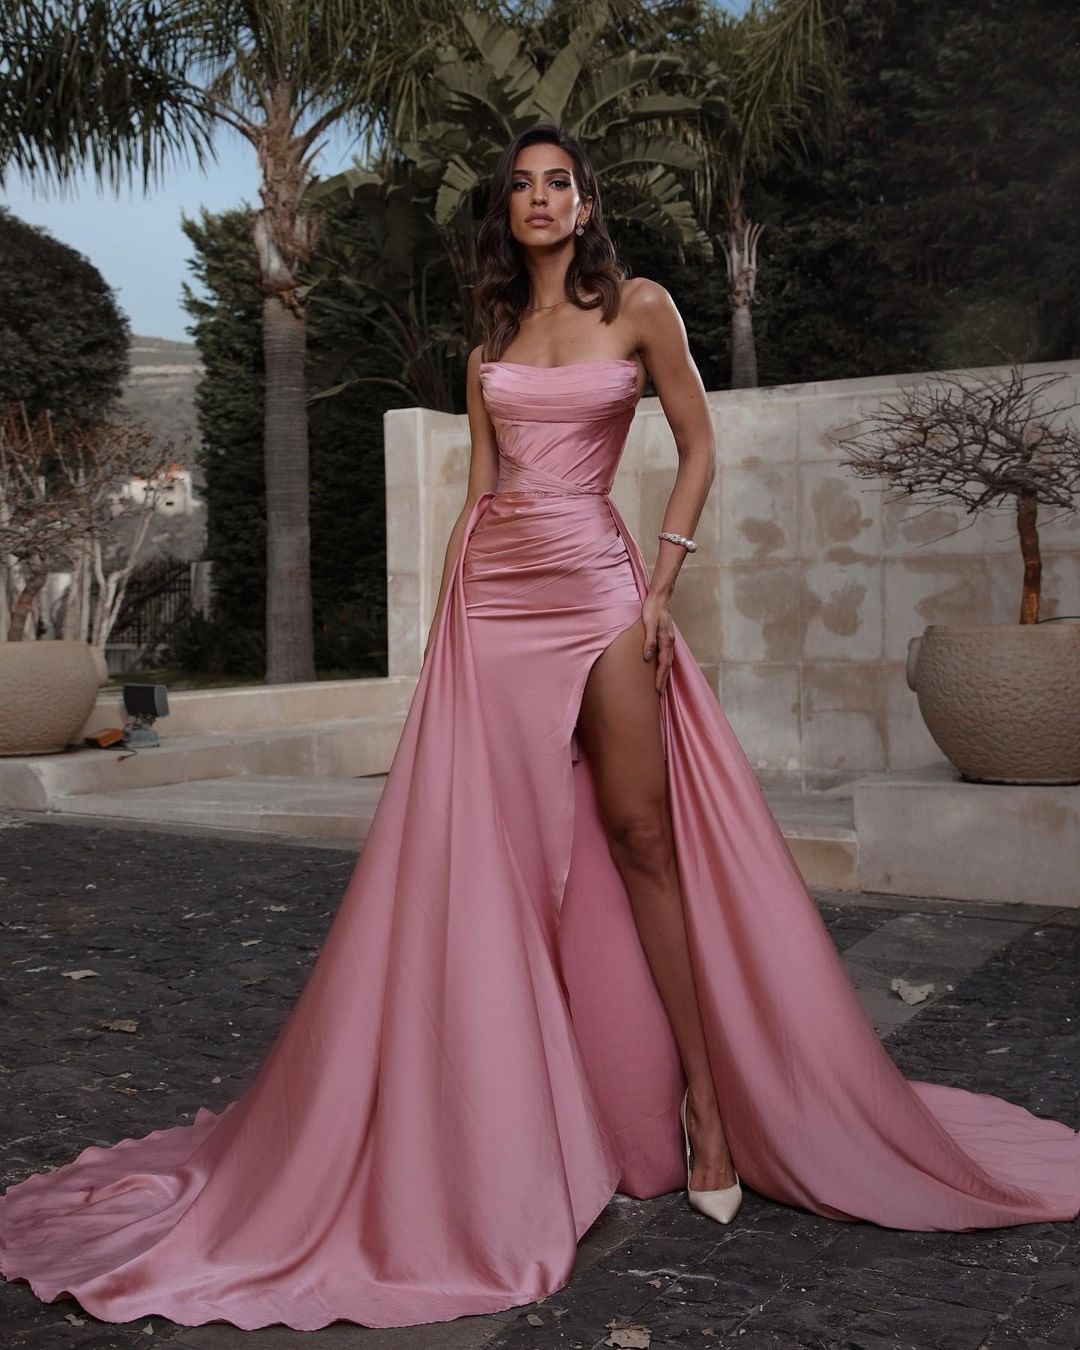 Pink Strapless Sleeveless Slit Prom Dress With Detachable Skirt: